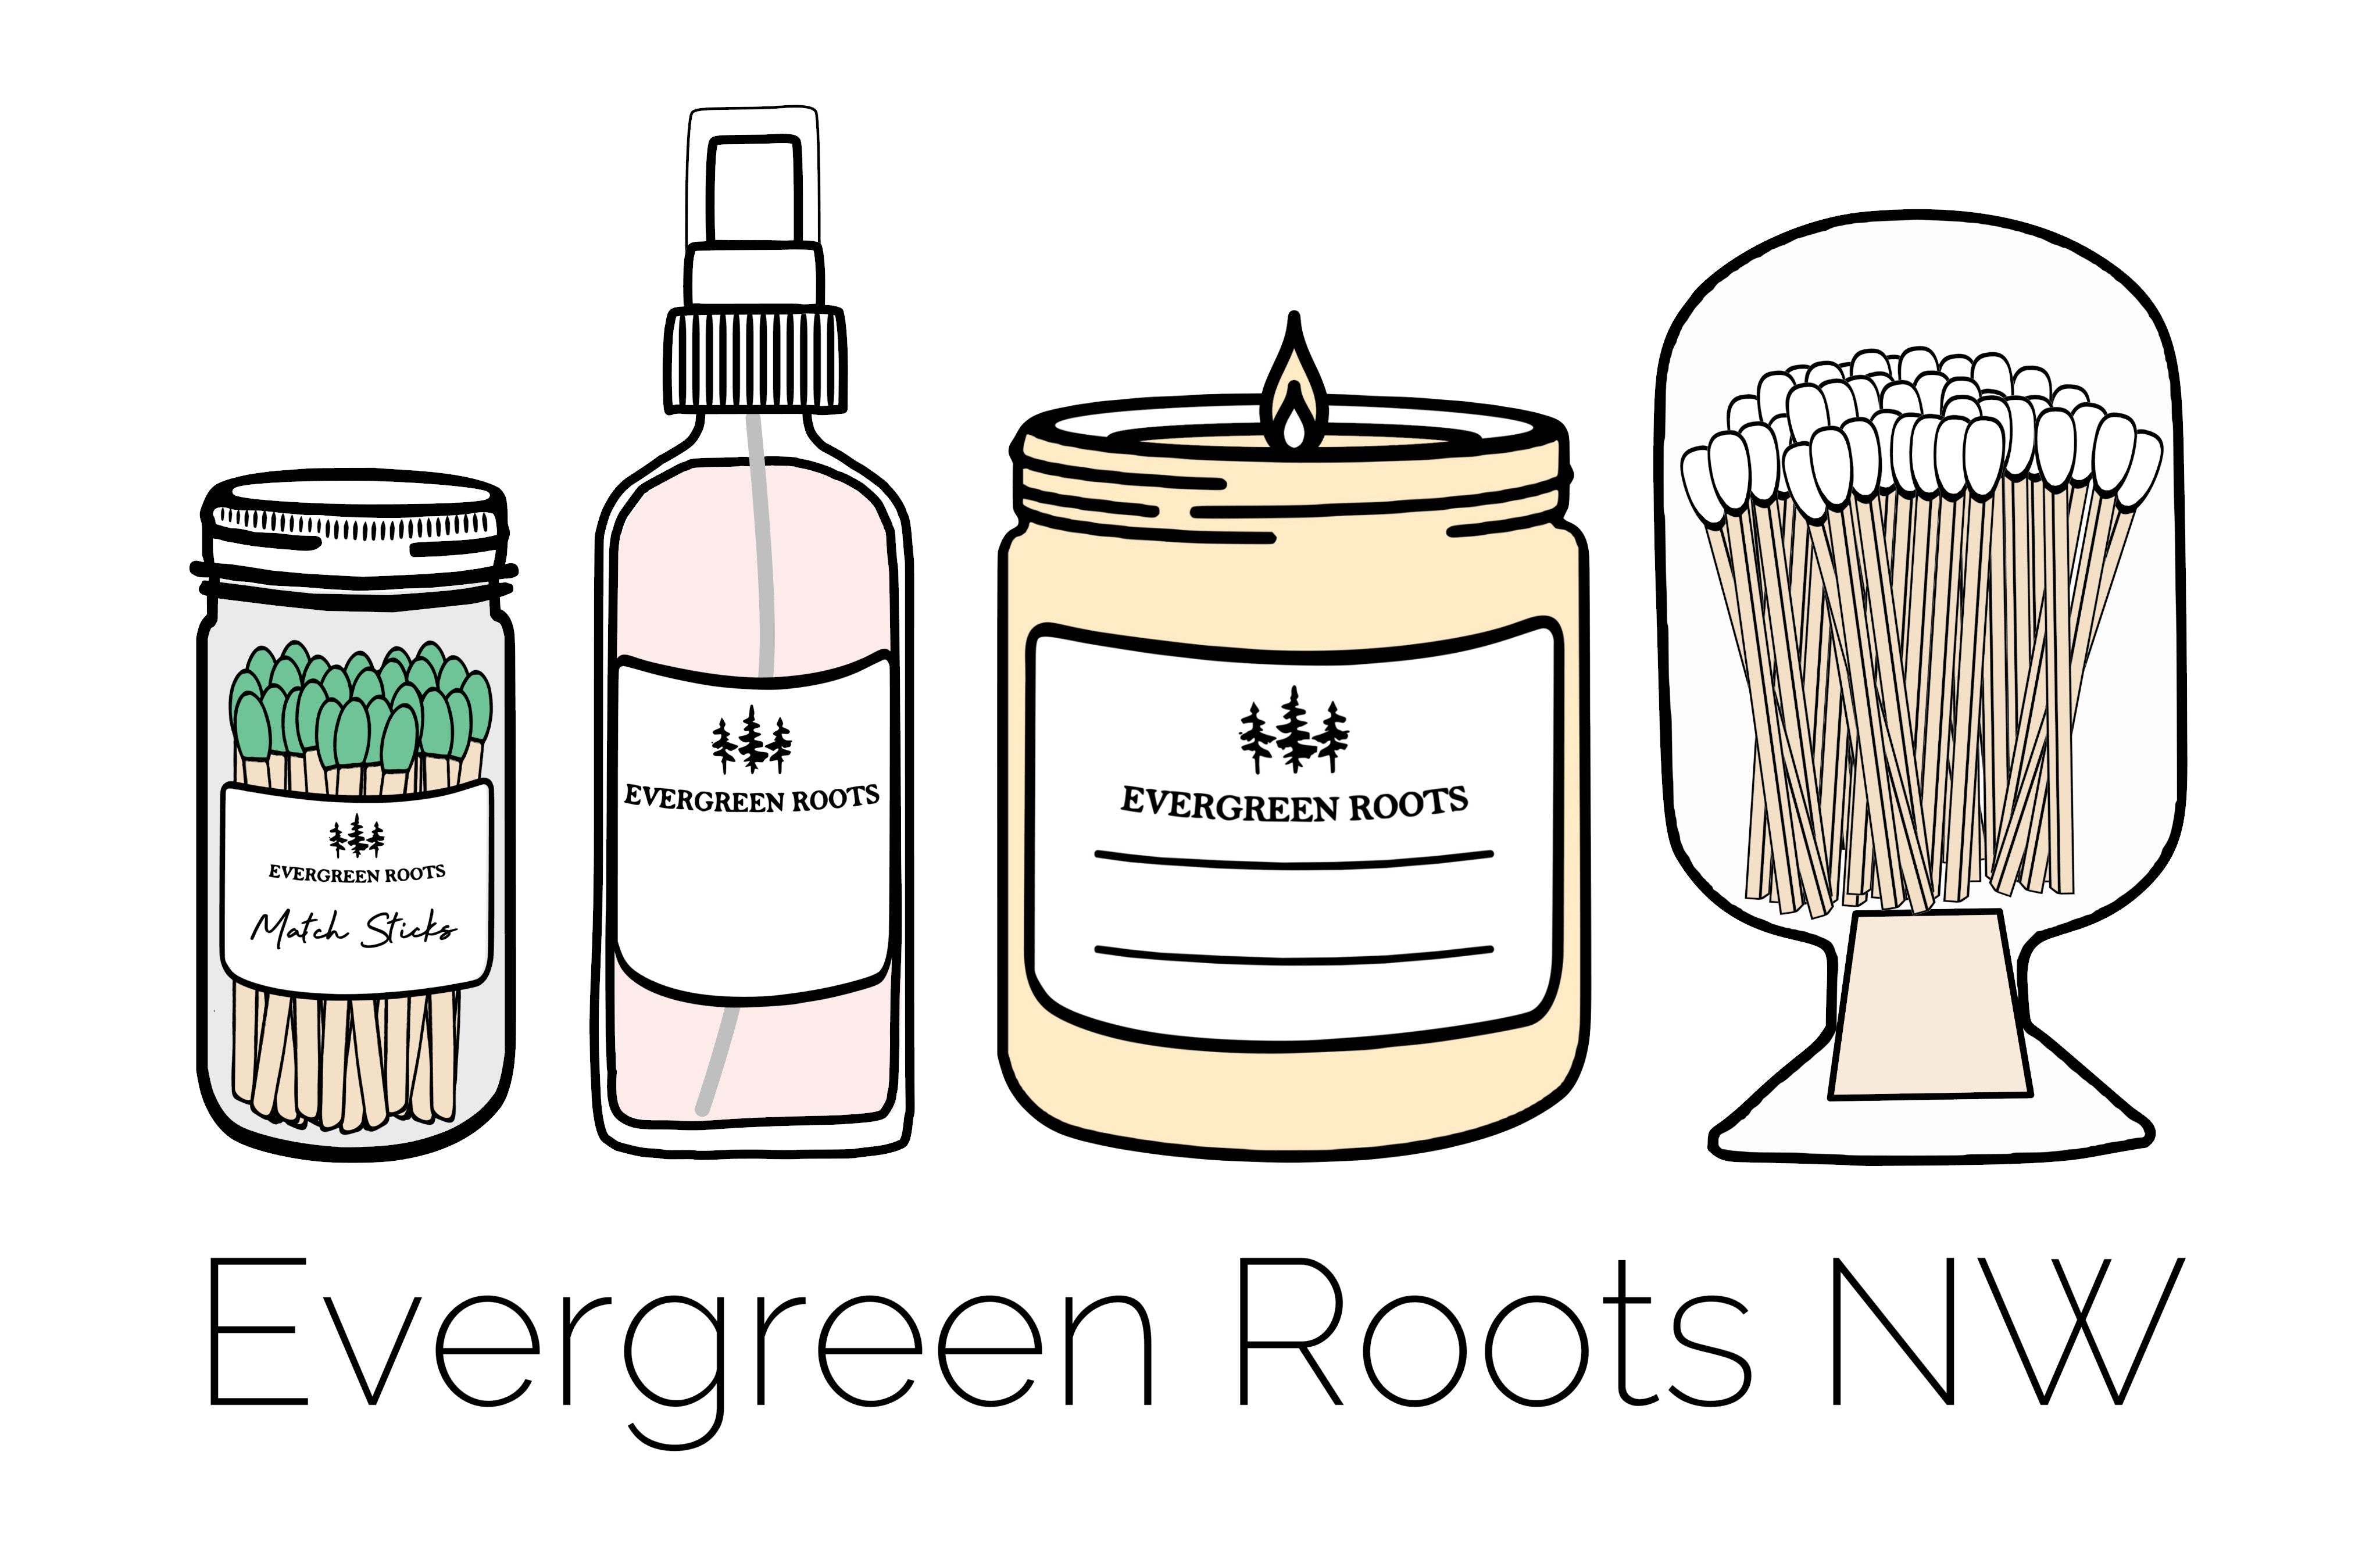 Evergreen Roots NW, LLC